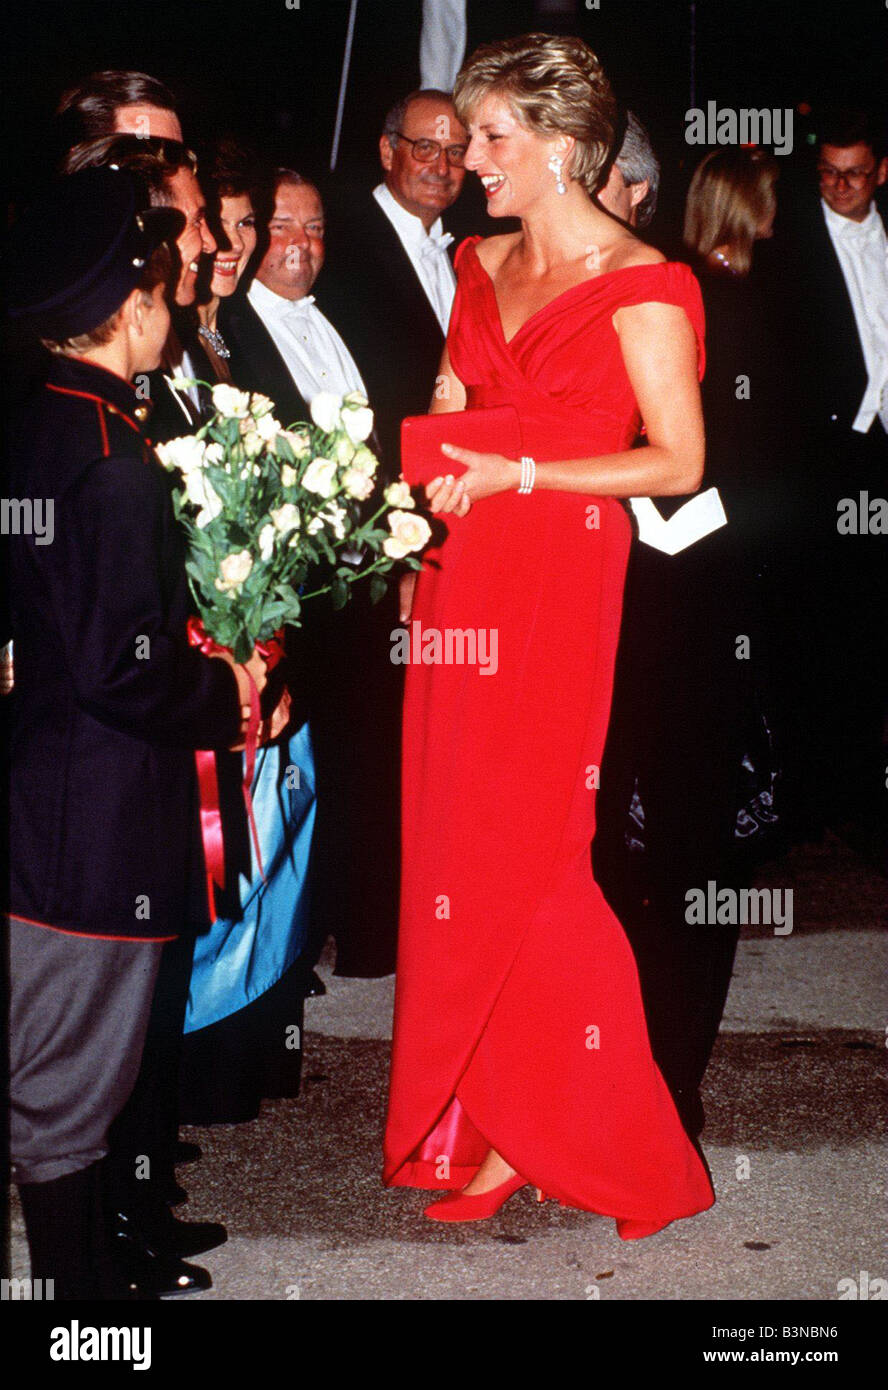 Princess diana 1996 hi-res stock photography and images - Alamy